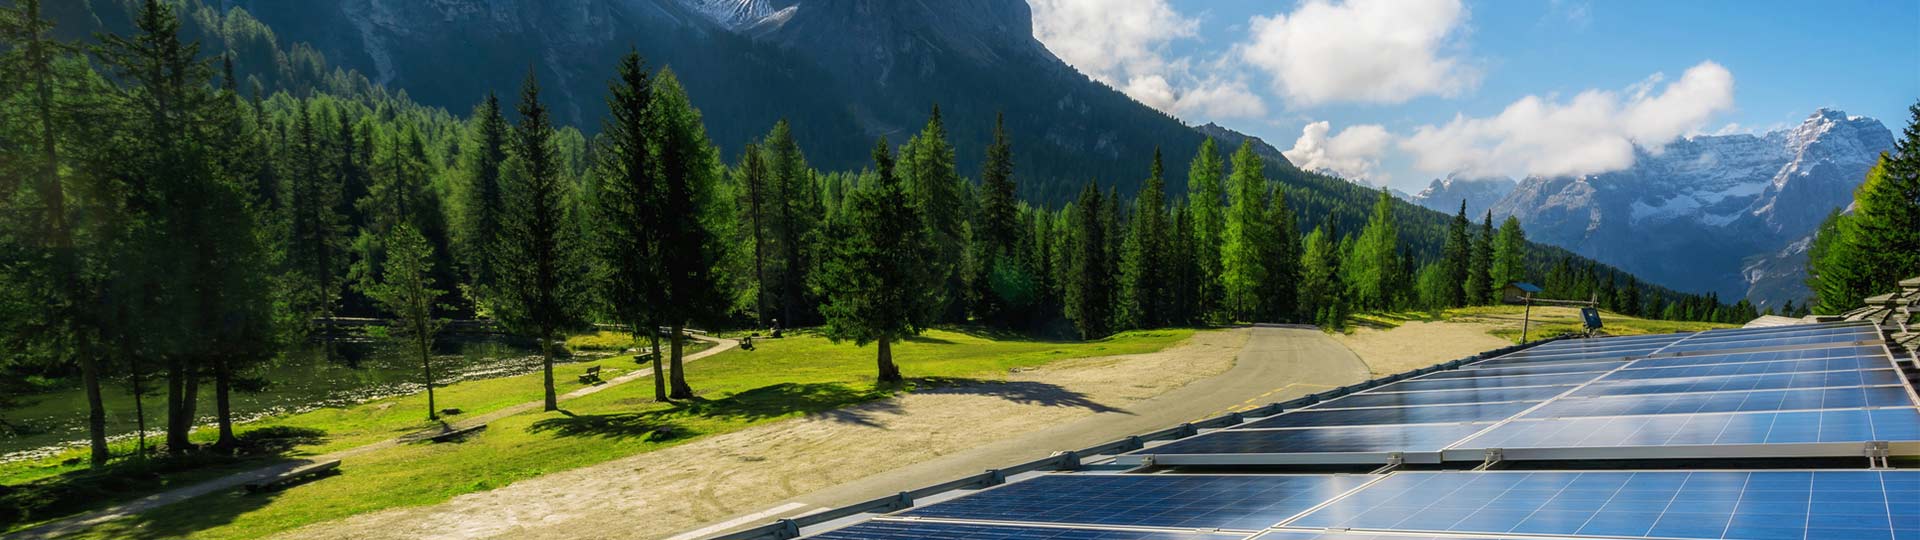 Solar plant near mountains